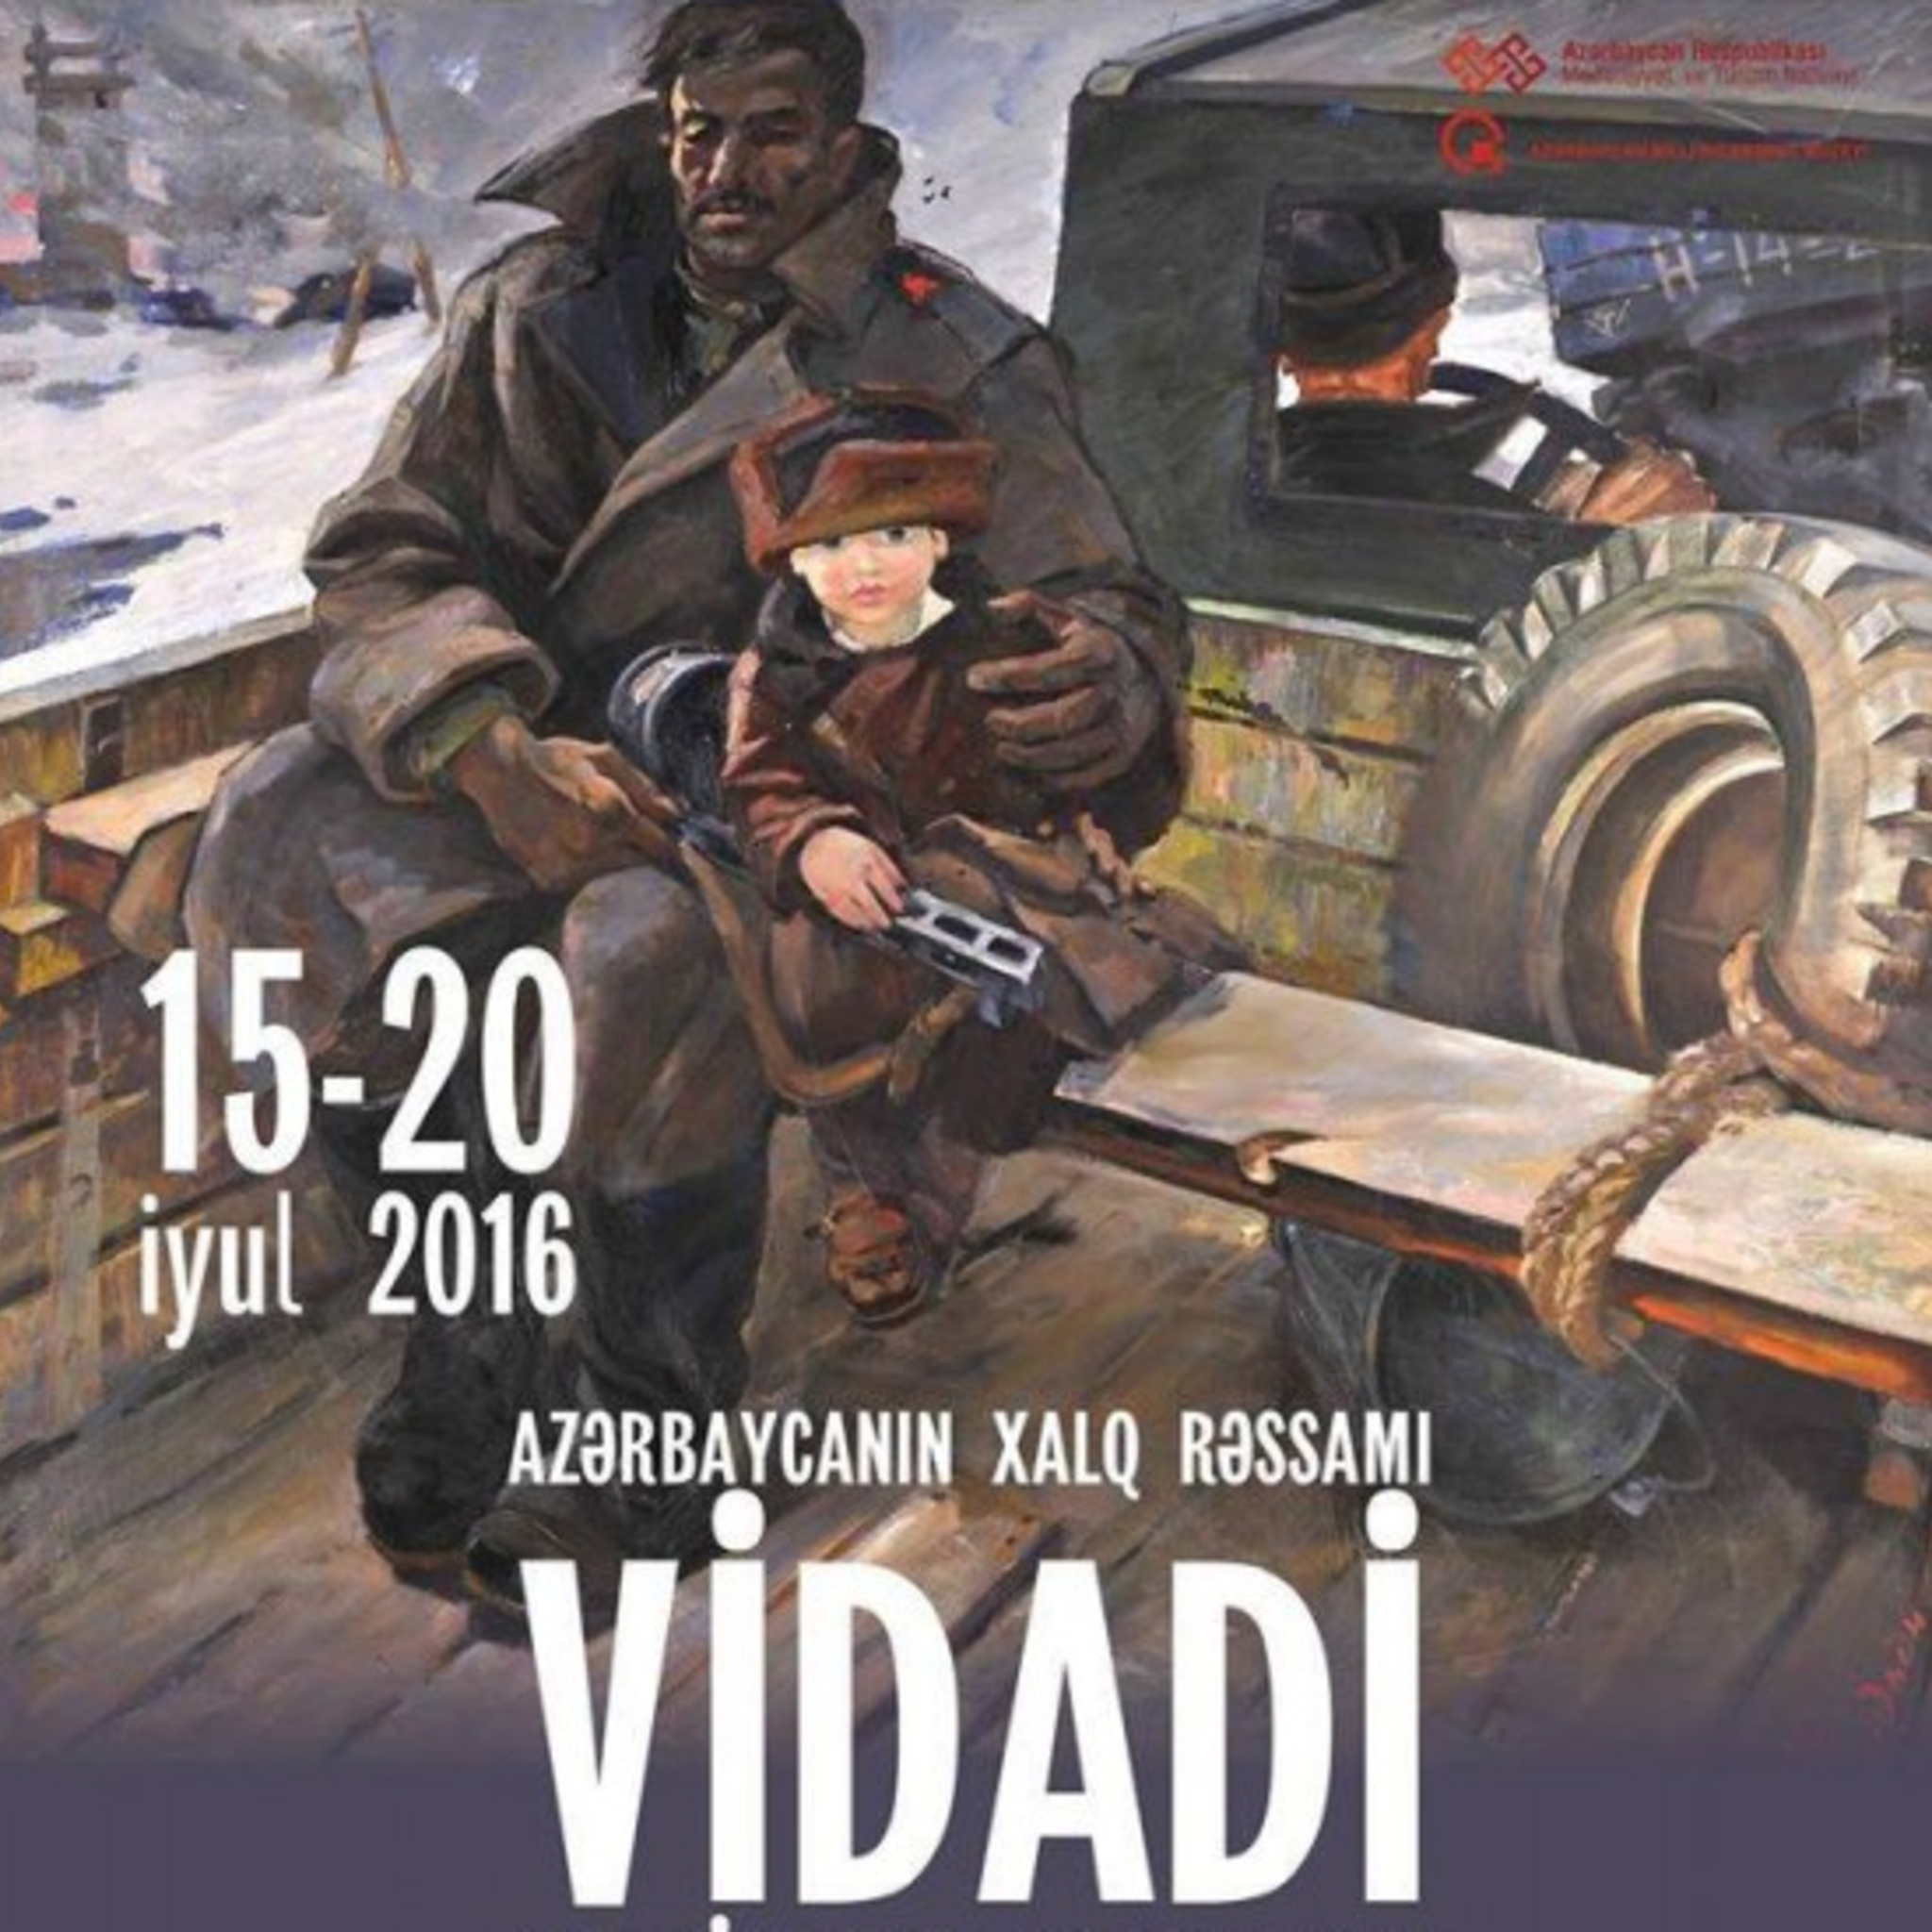 Exhibition of works by Vidadi Narimanbeyov